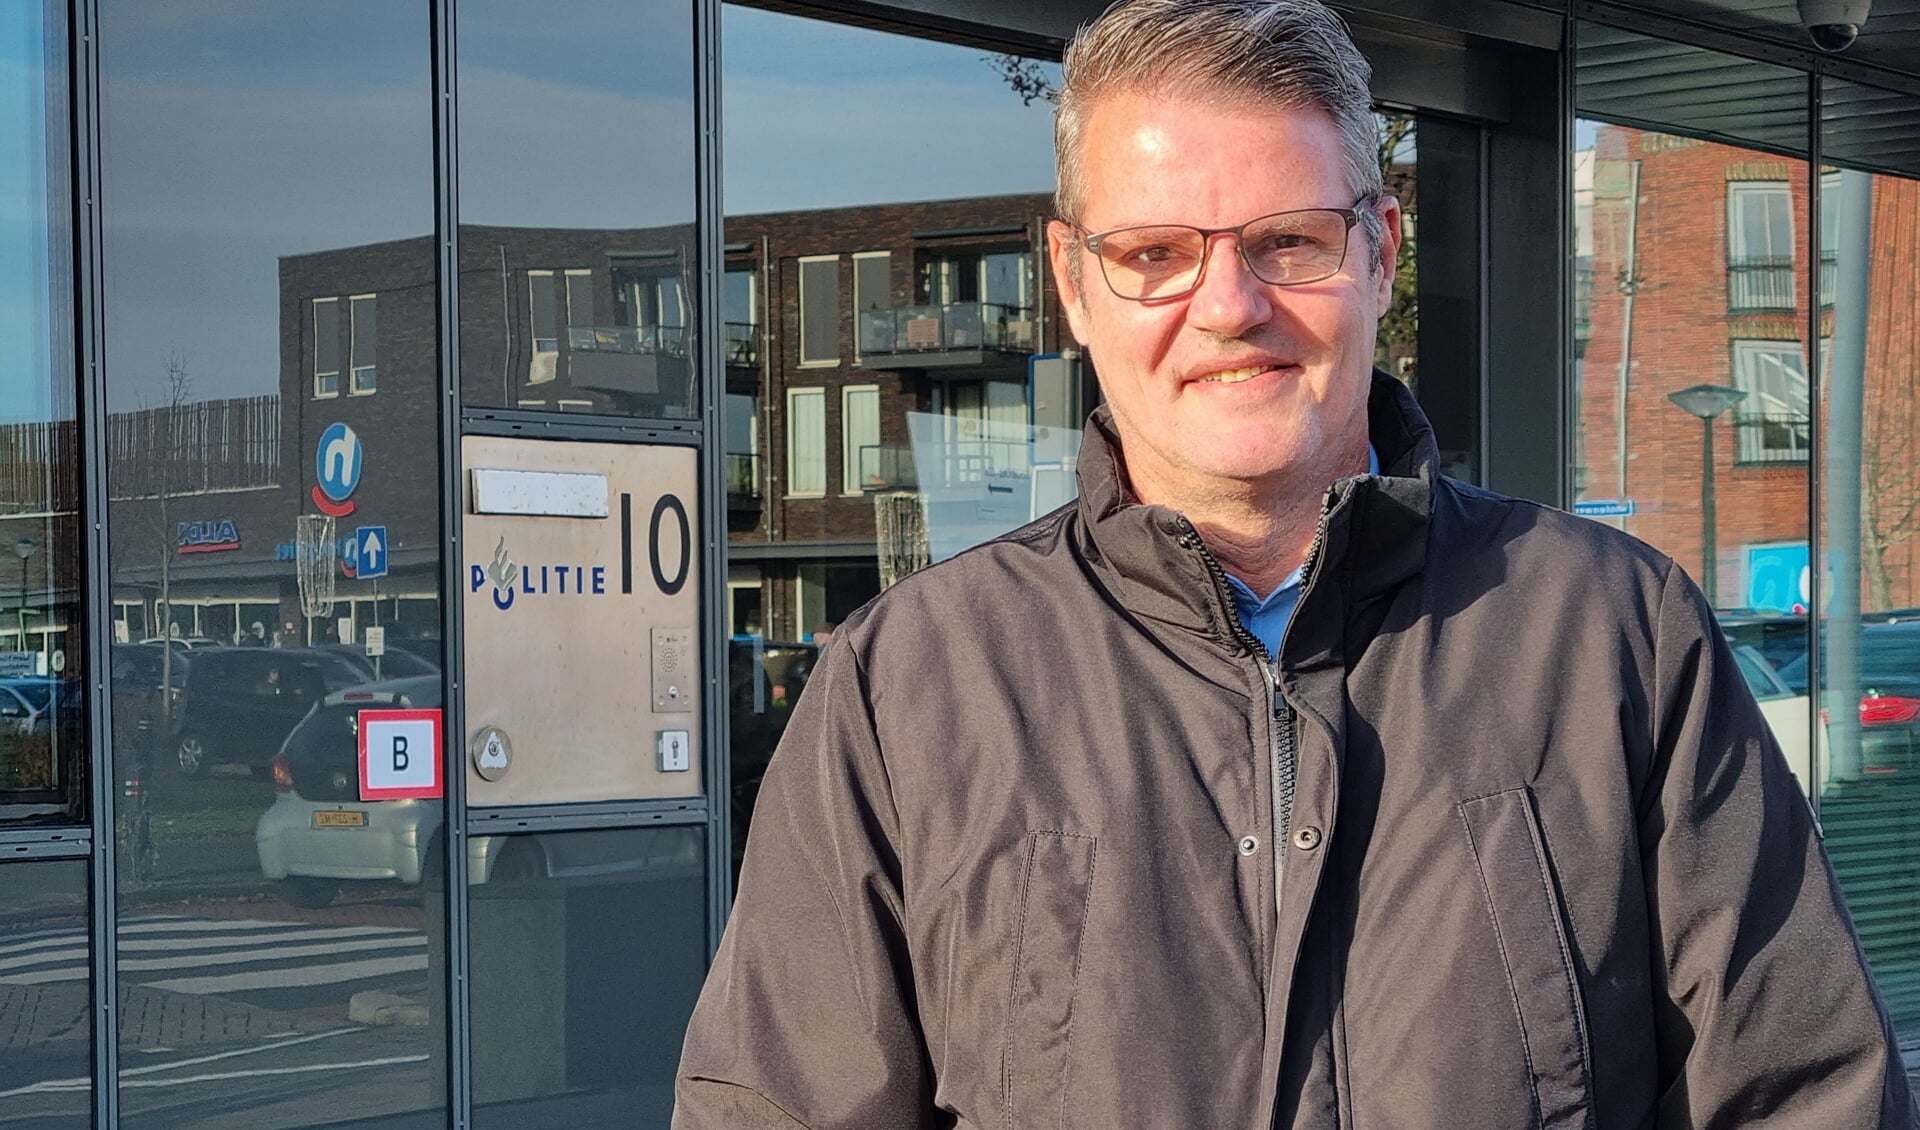 Theo van Son is de lokale VVD-woordvoerder 'veiligheid'.